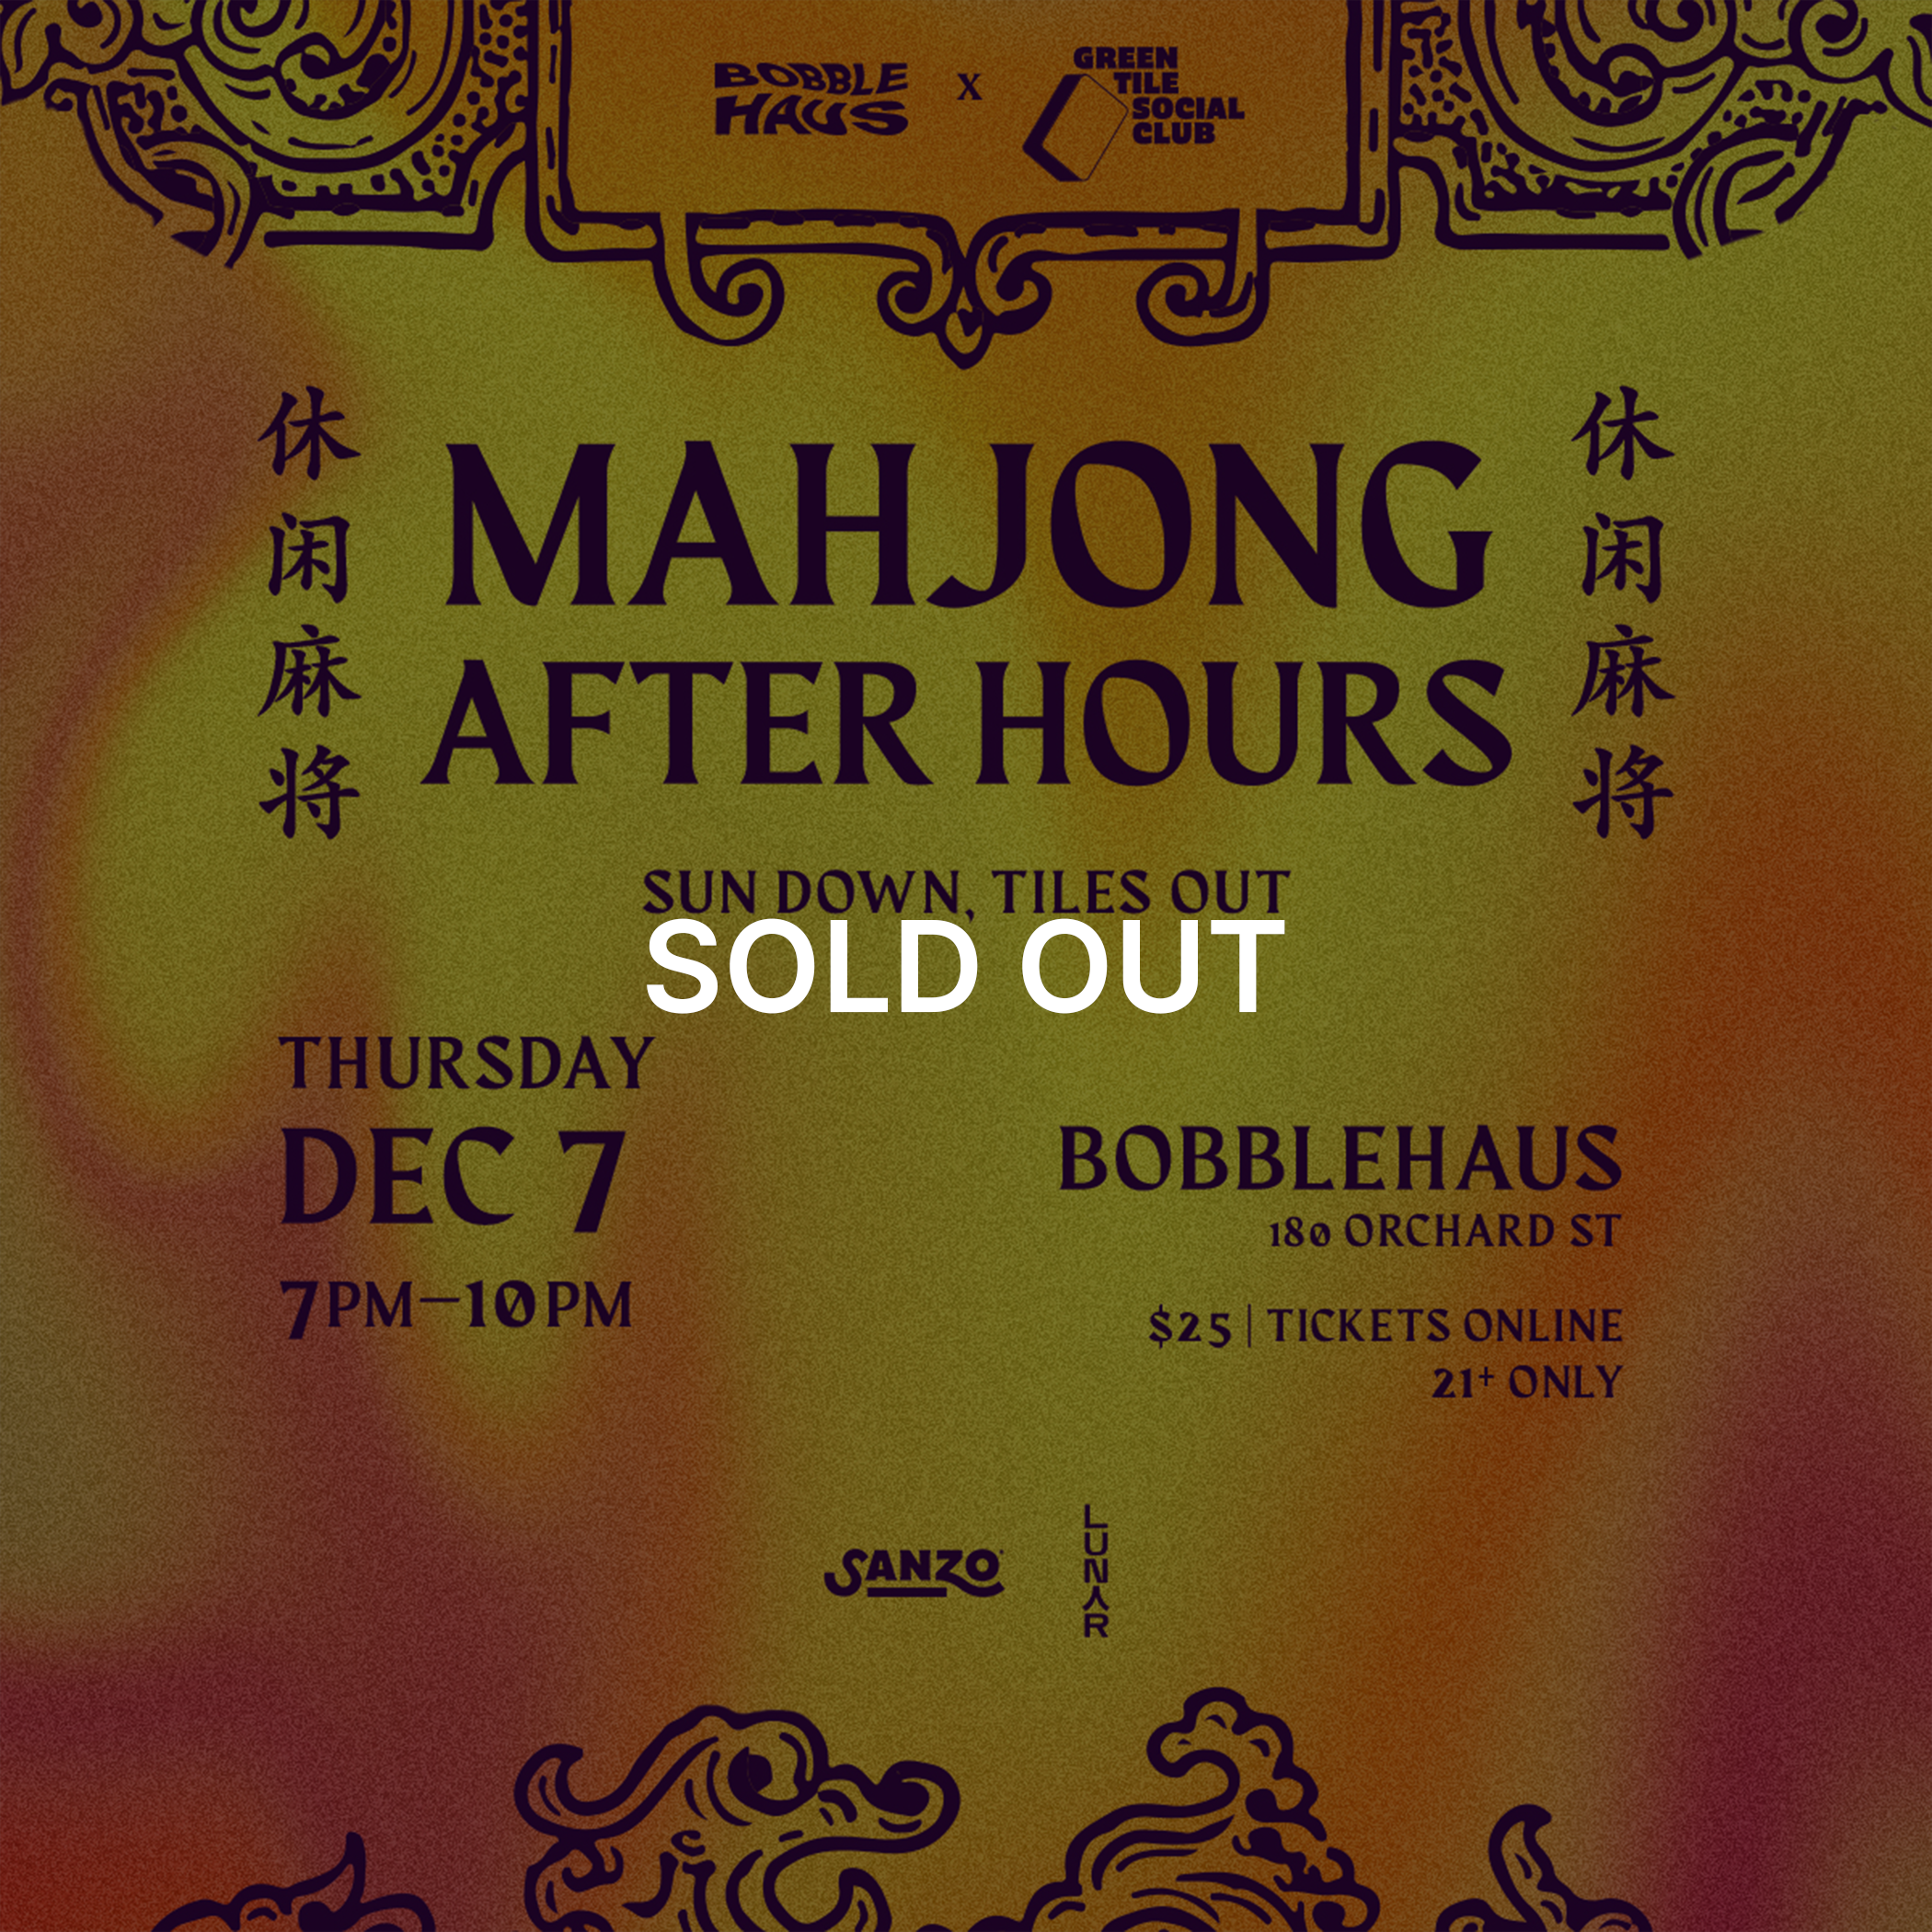 Mahjong After Hours: BH x Green Tile Social Club - Bobblehaus